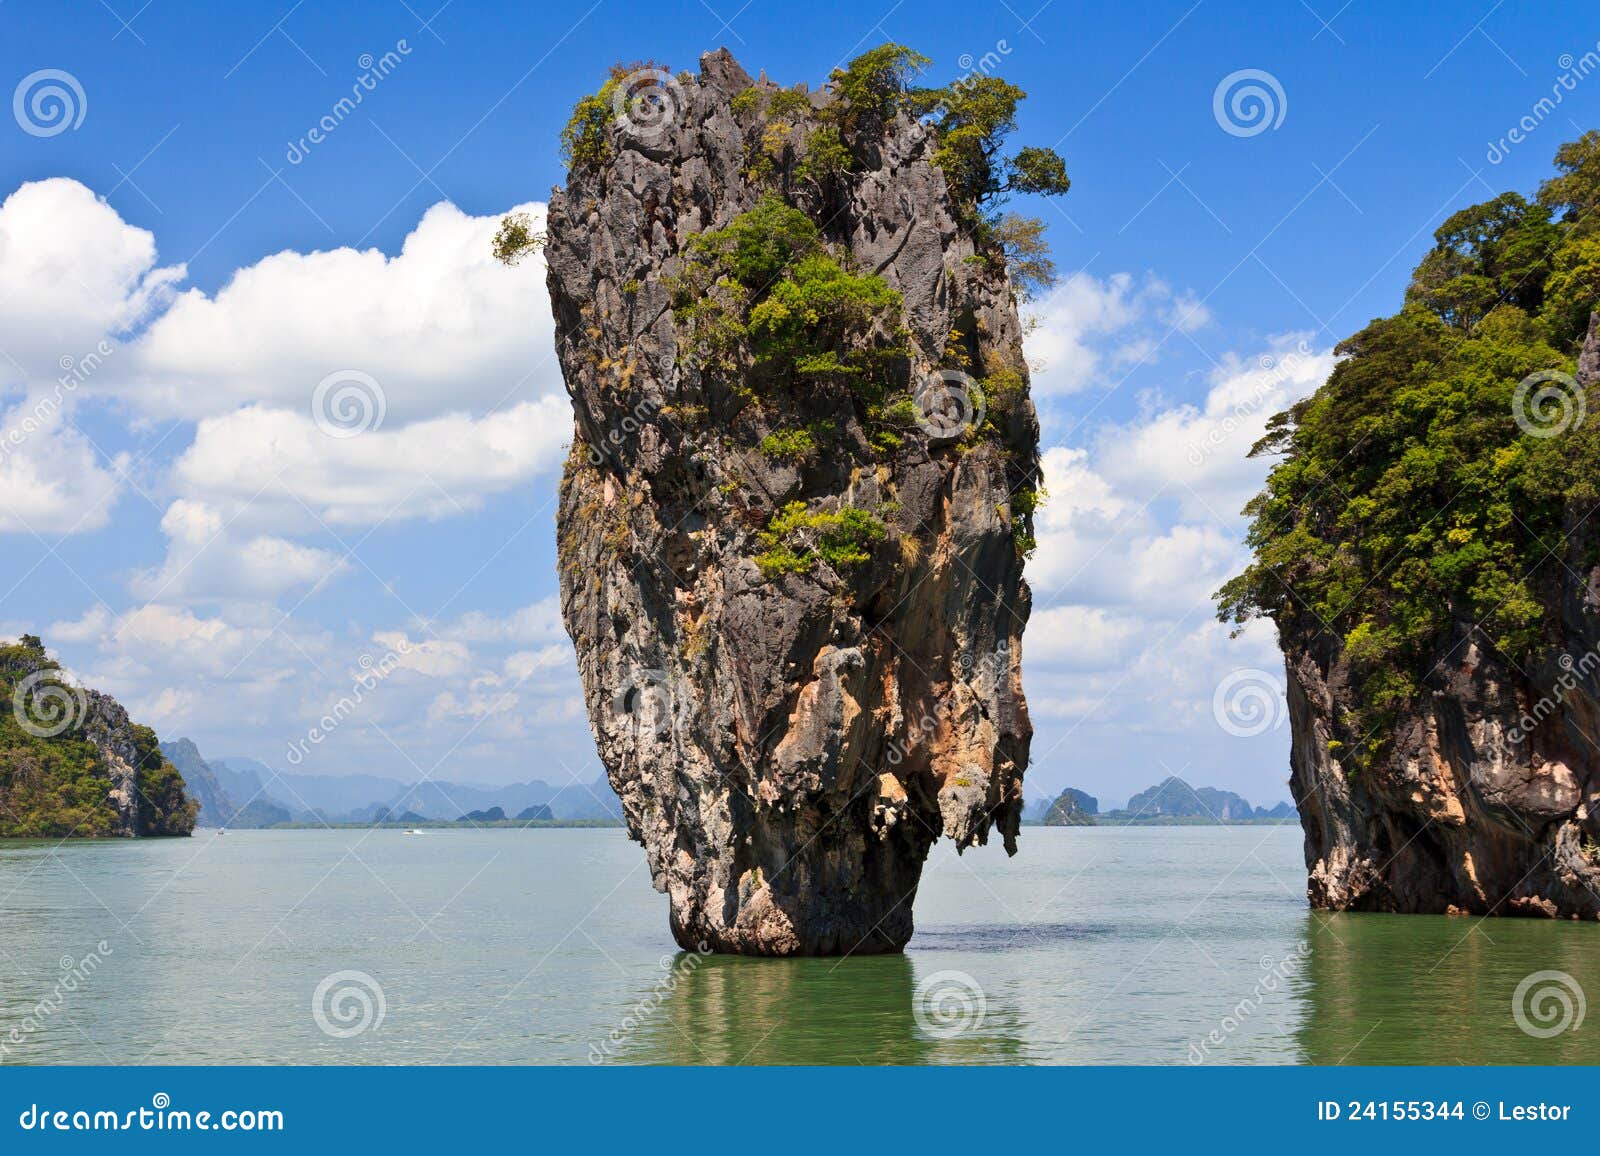 James Bond island Ko Tapu stock photo. Image of limestone - 24155344